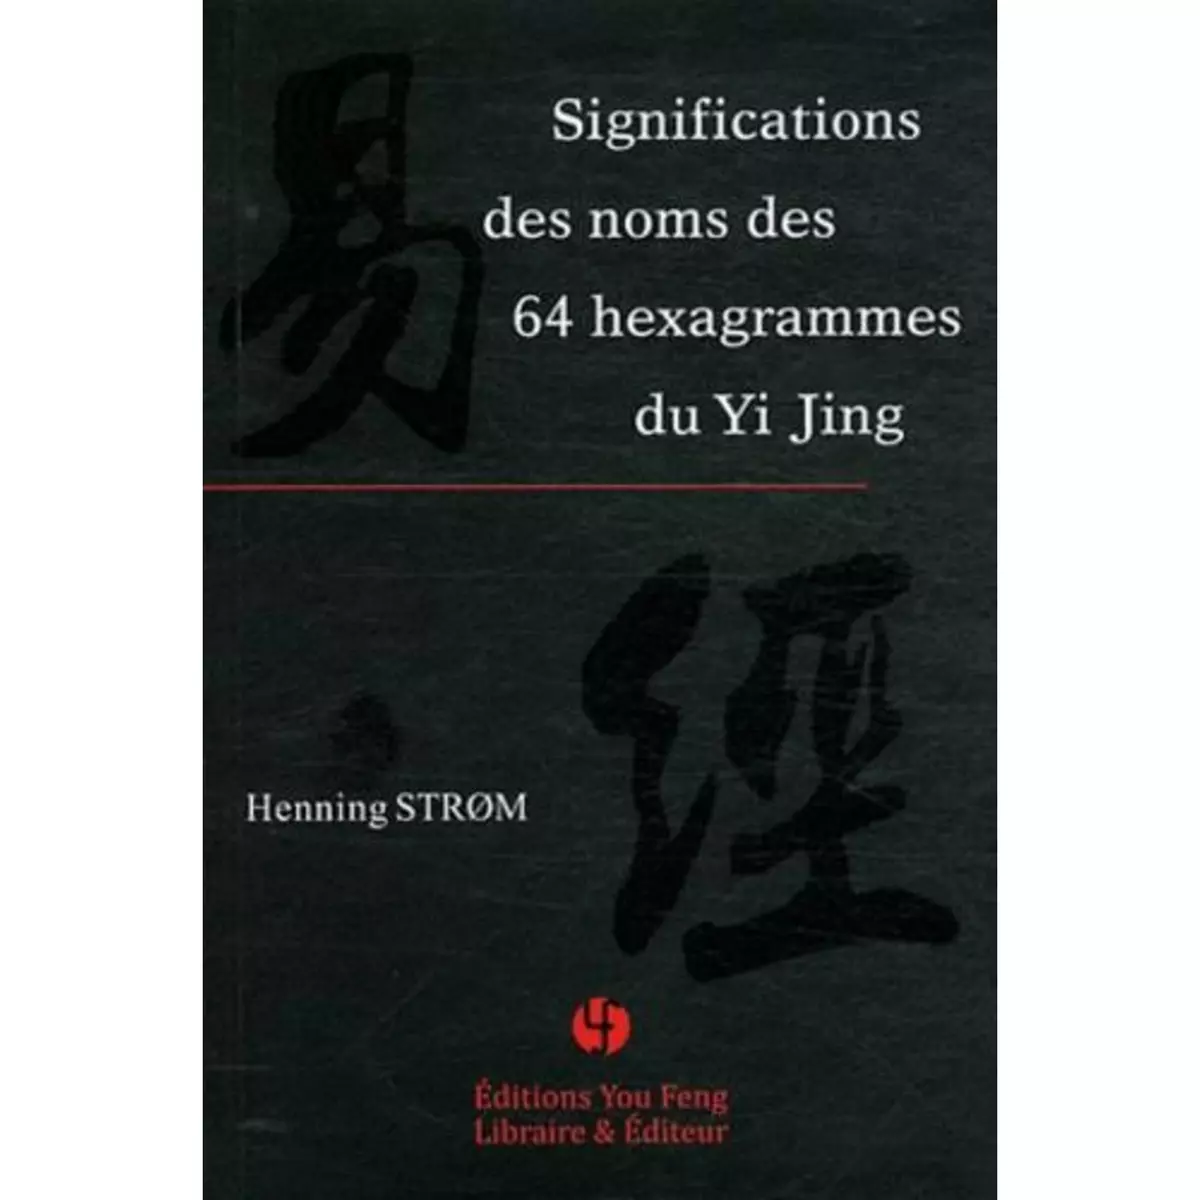  SIGNIFICATIONS DES NOMS DES 64 HEXAGRAMMES DU YI JING, Strom Henning